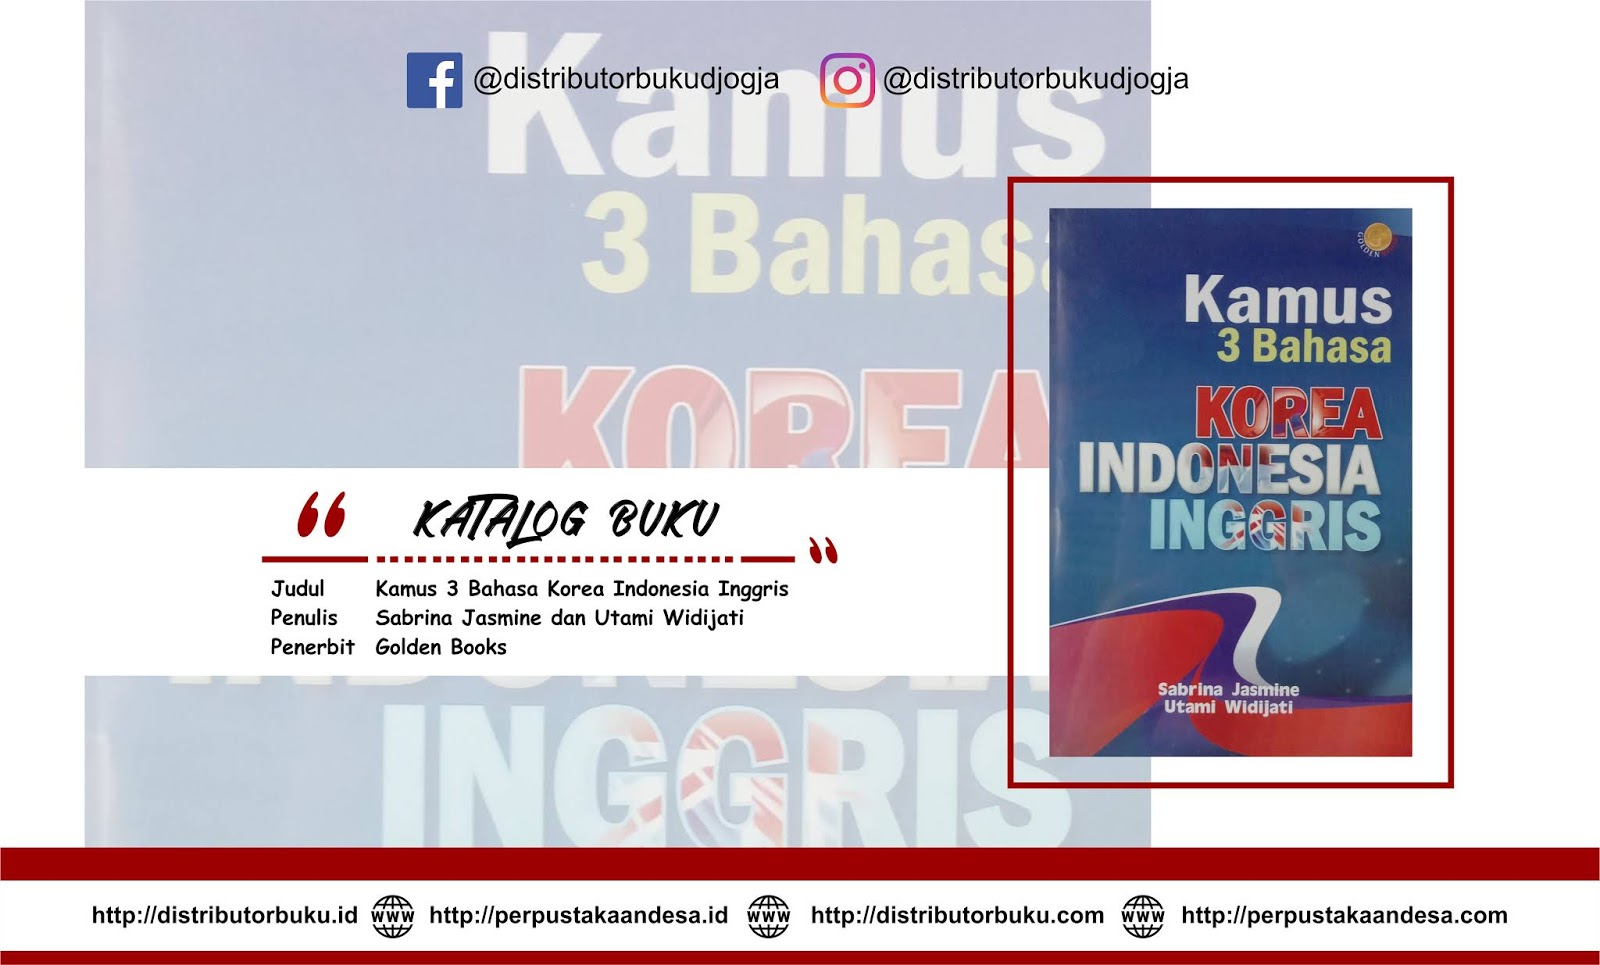  Kamus  3 Bahasa  Korea Indonesia Inggris  Distributor Buku